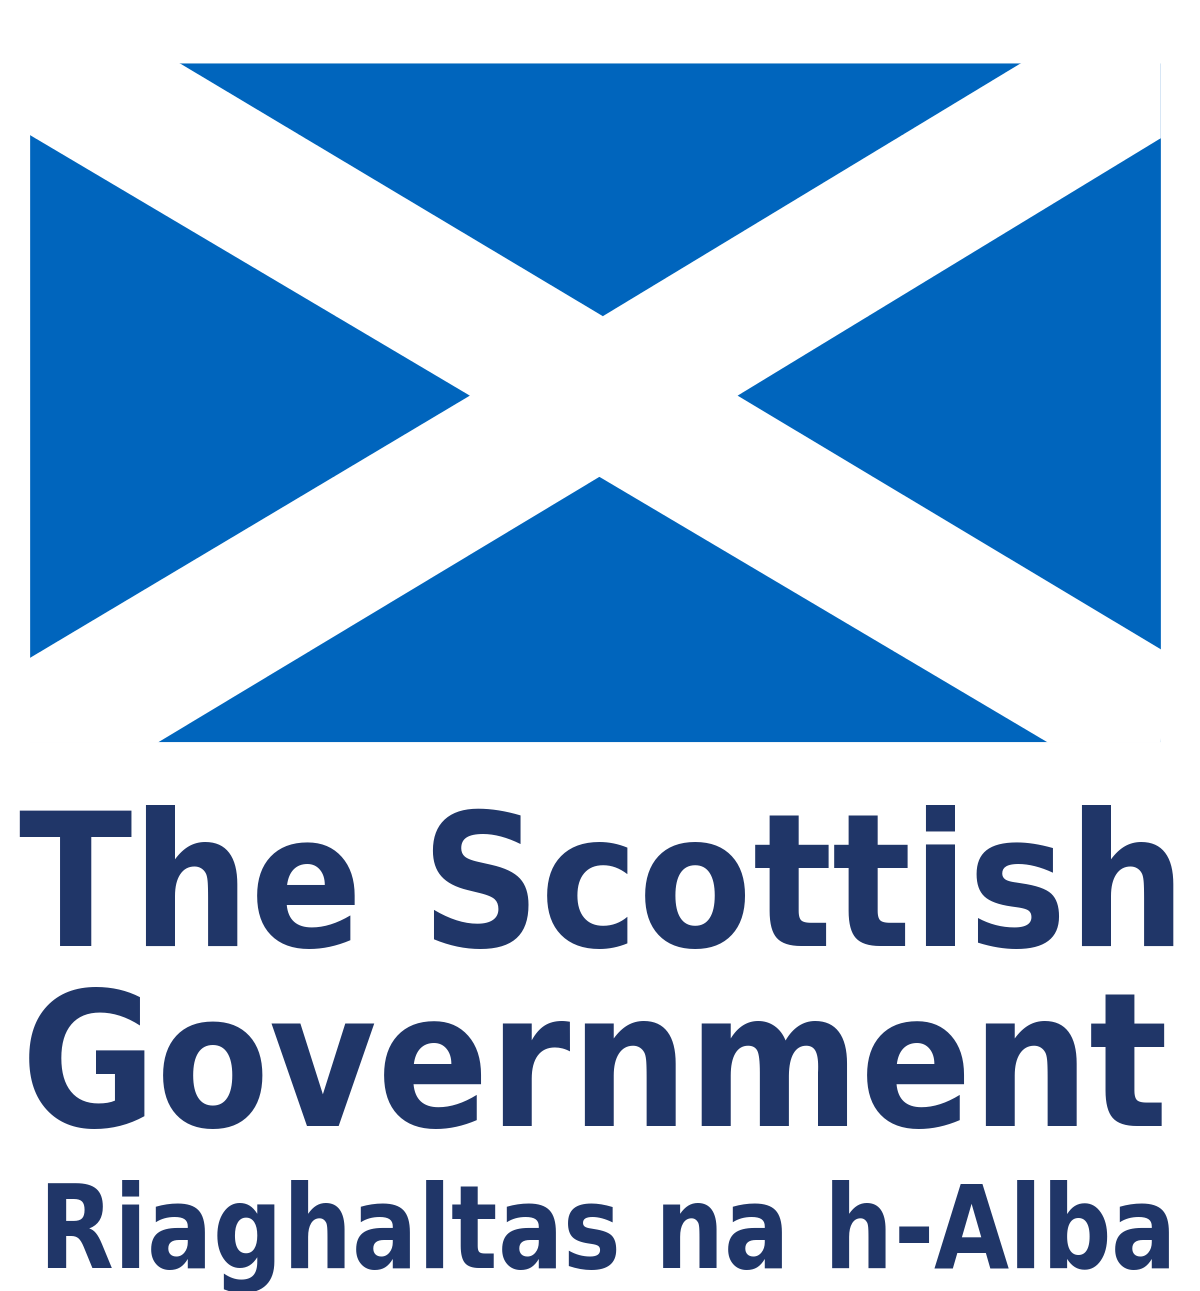 Scottish government logo featured image digital sentinel